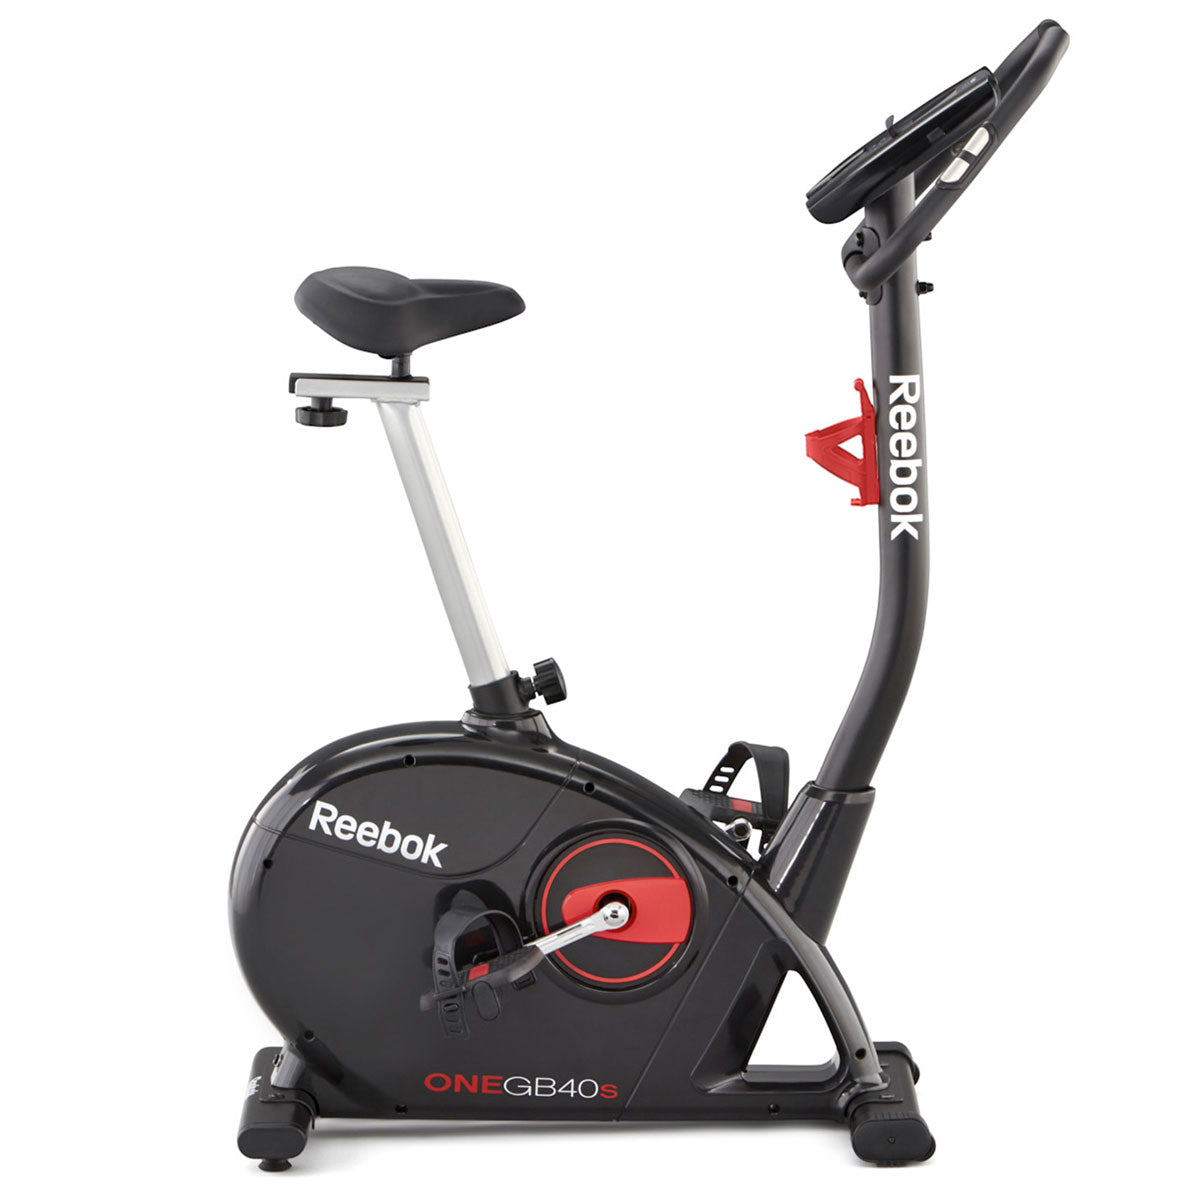 GB40S One Series Bike | Reebok Fitness Equipment (Australia)